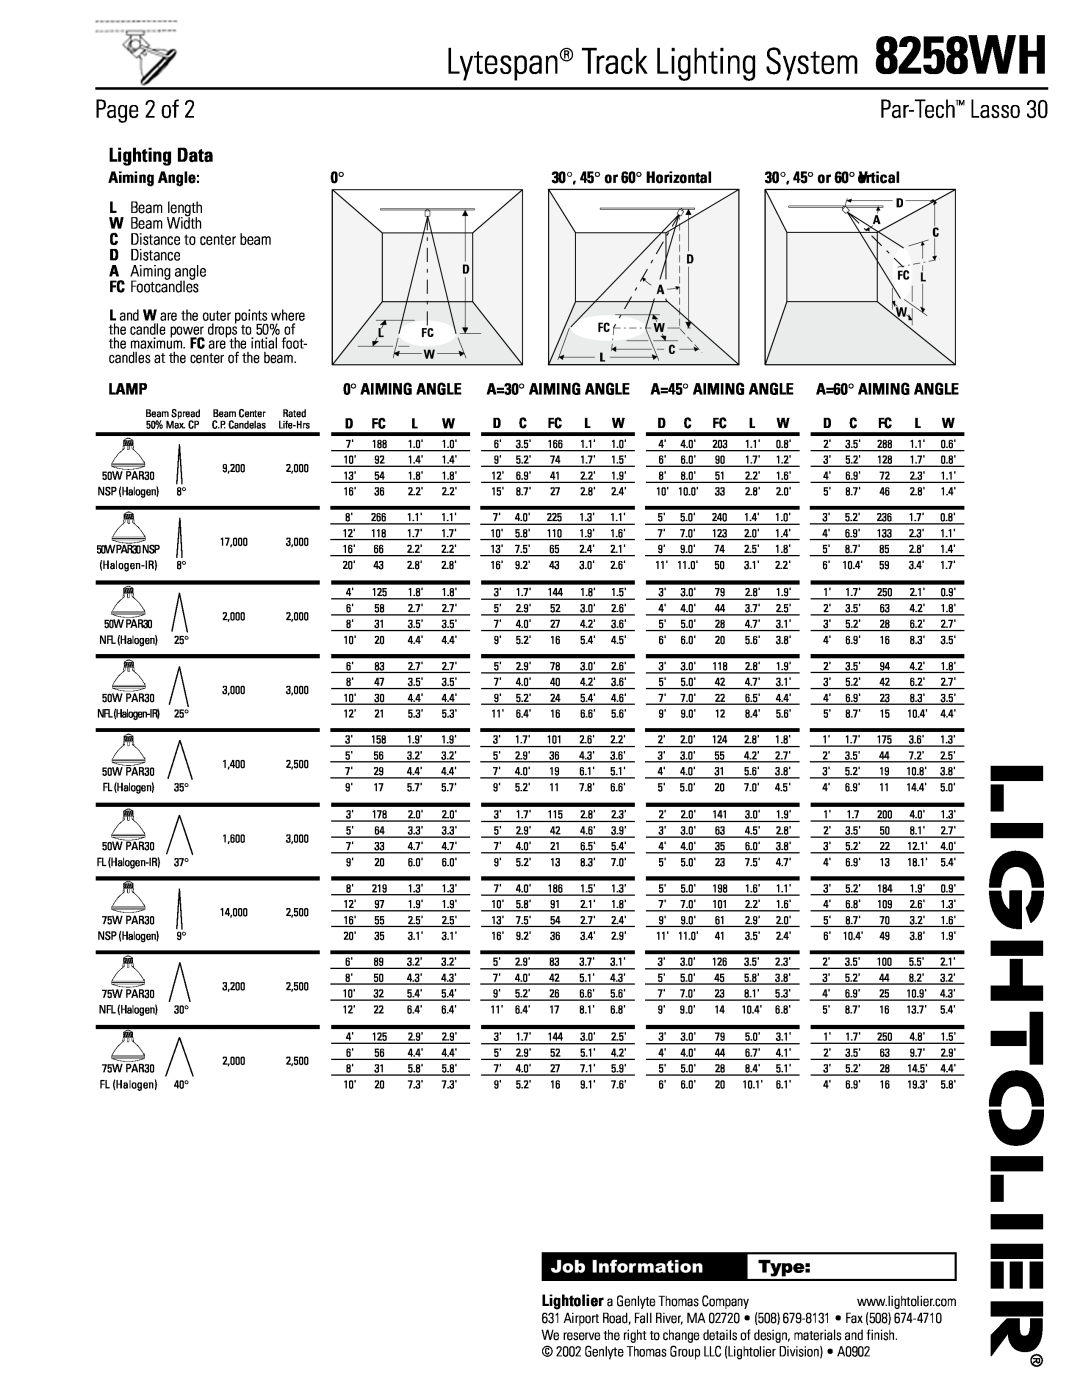 Lightolier 8258WH Lytespan Track Lighting System, Page 2 of, Par-Tech Lasso, Lighting Data, Job Information, Type, Lamp 